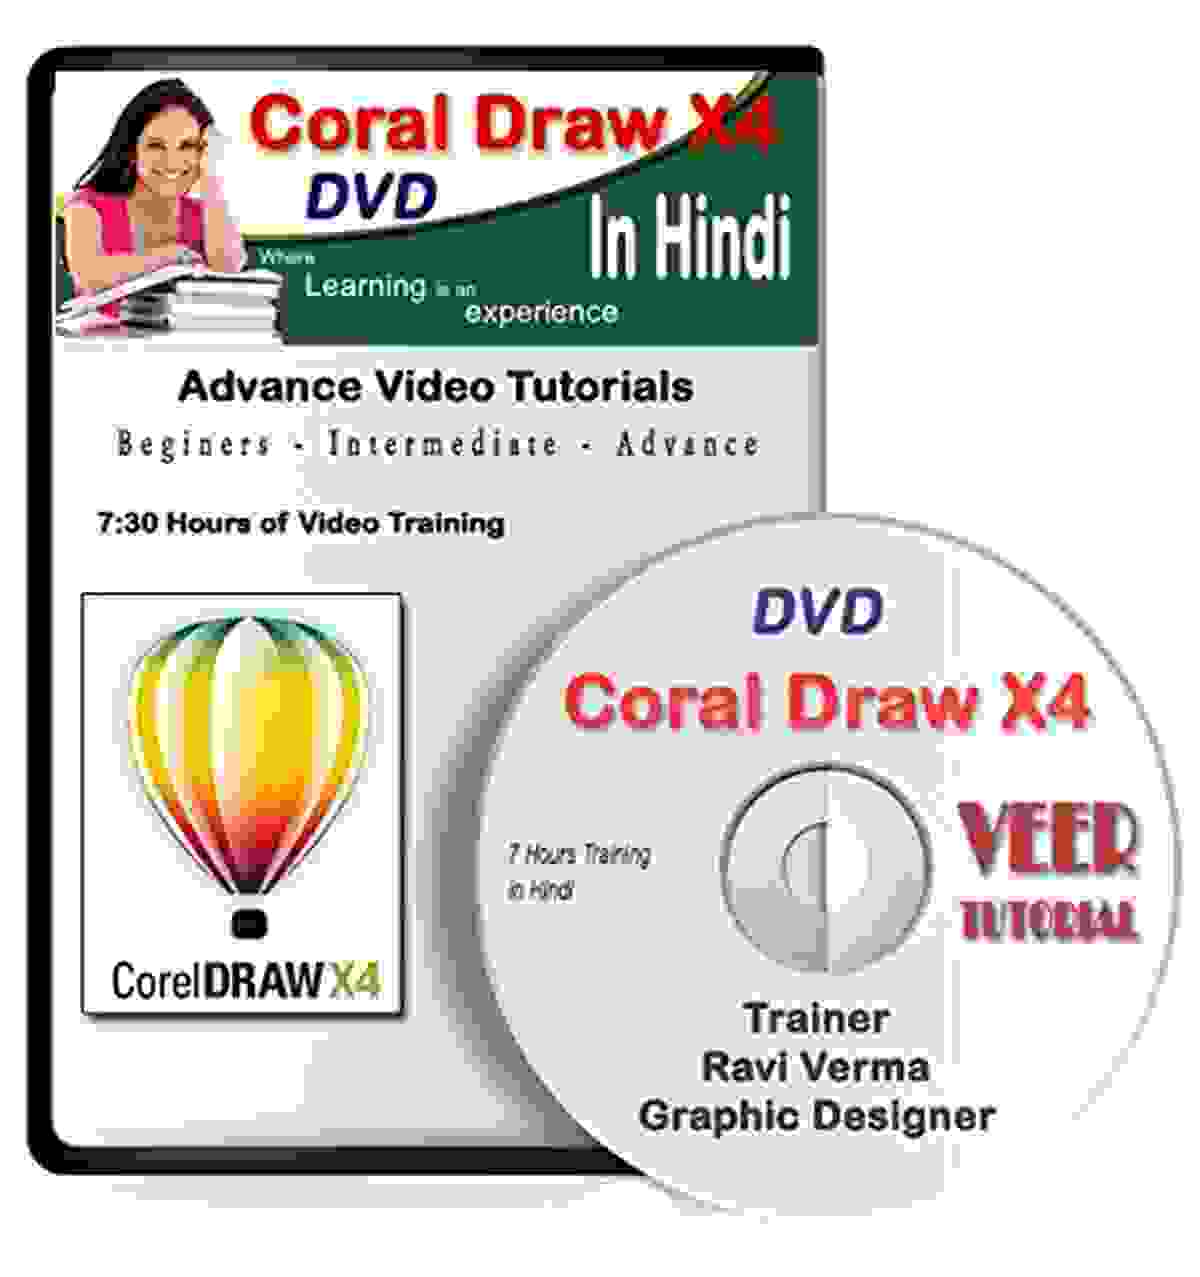 CorelDRAW Tutorial DVD Video Training (1 DVD, 7 Hrs) in Learning Hindi Video